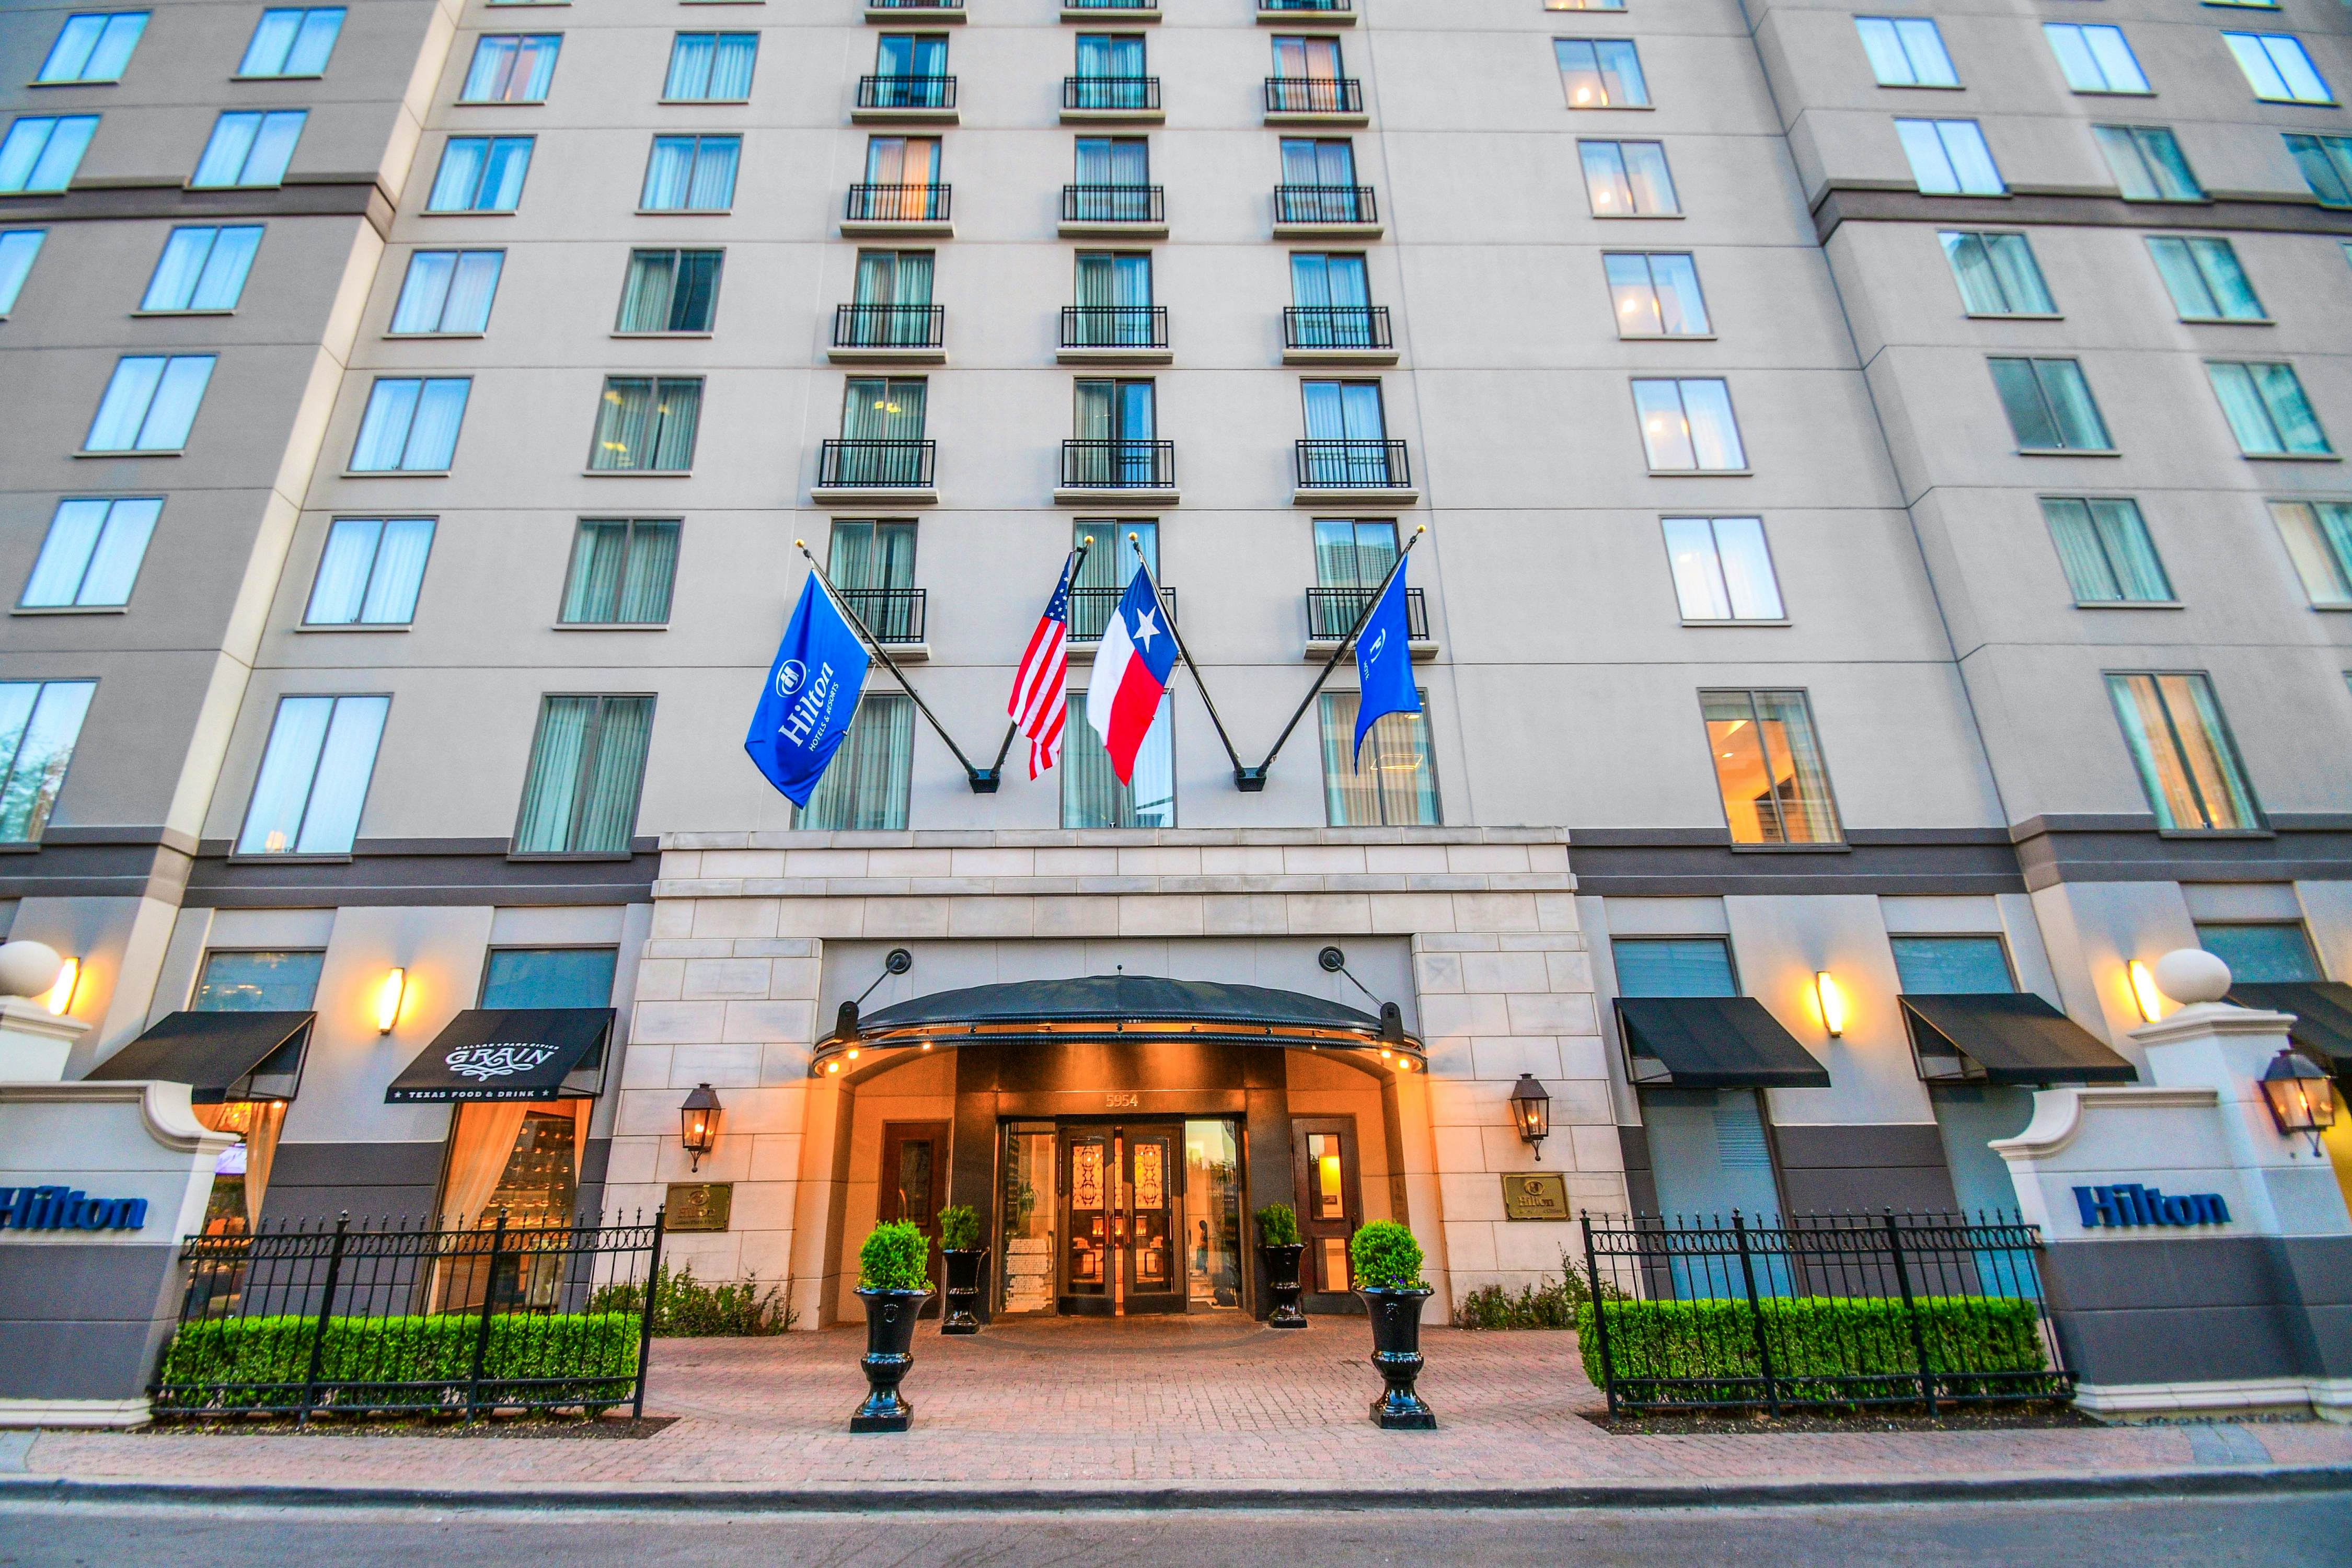 North Dallas' Hilton Hotel debuts new look after 5.5 million redo